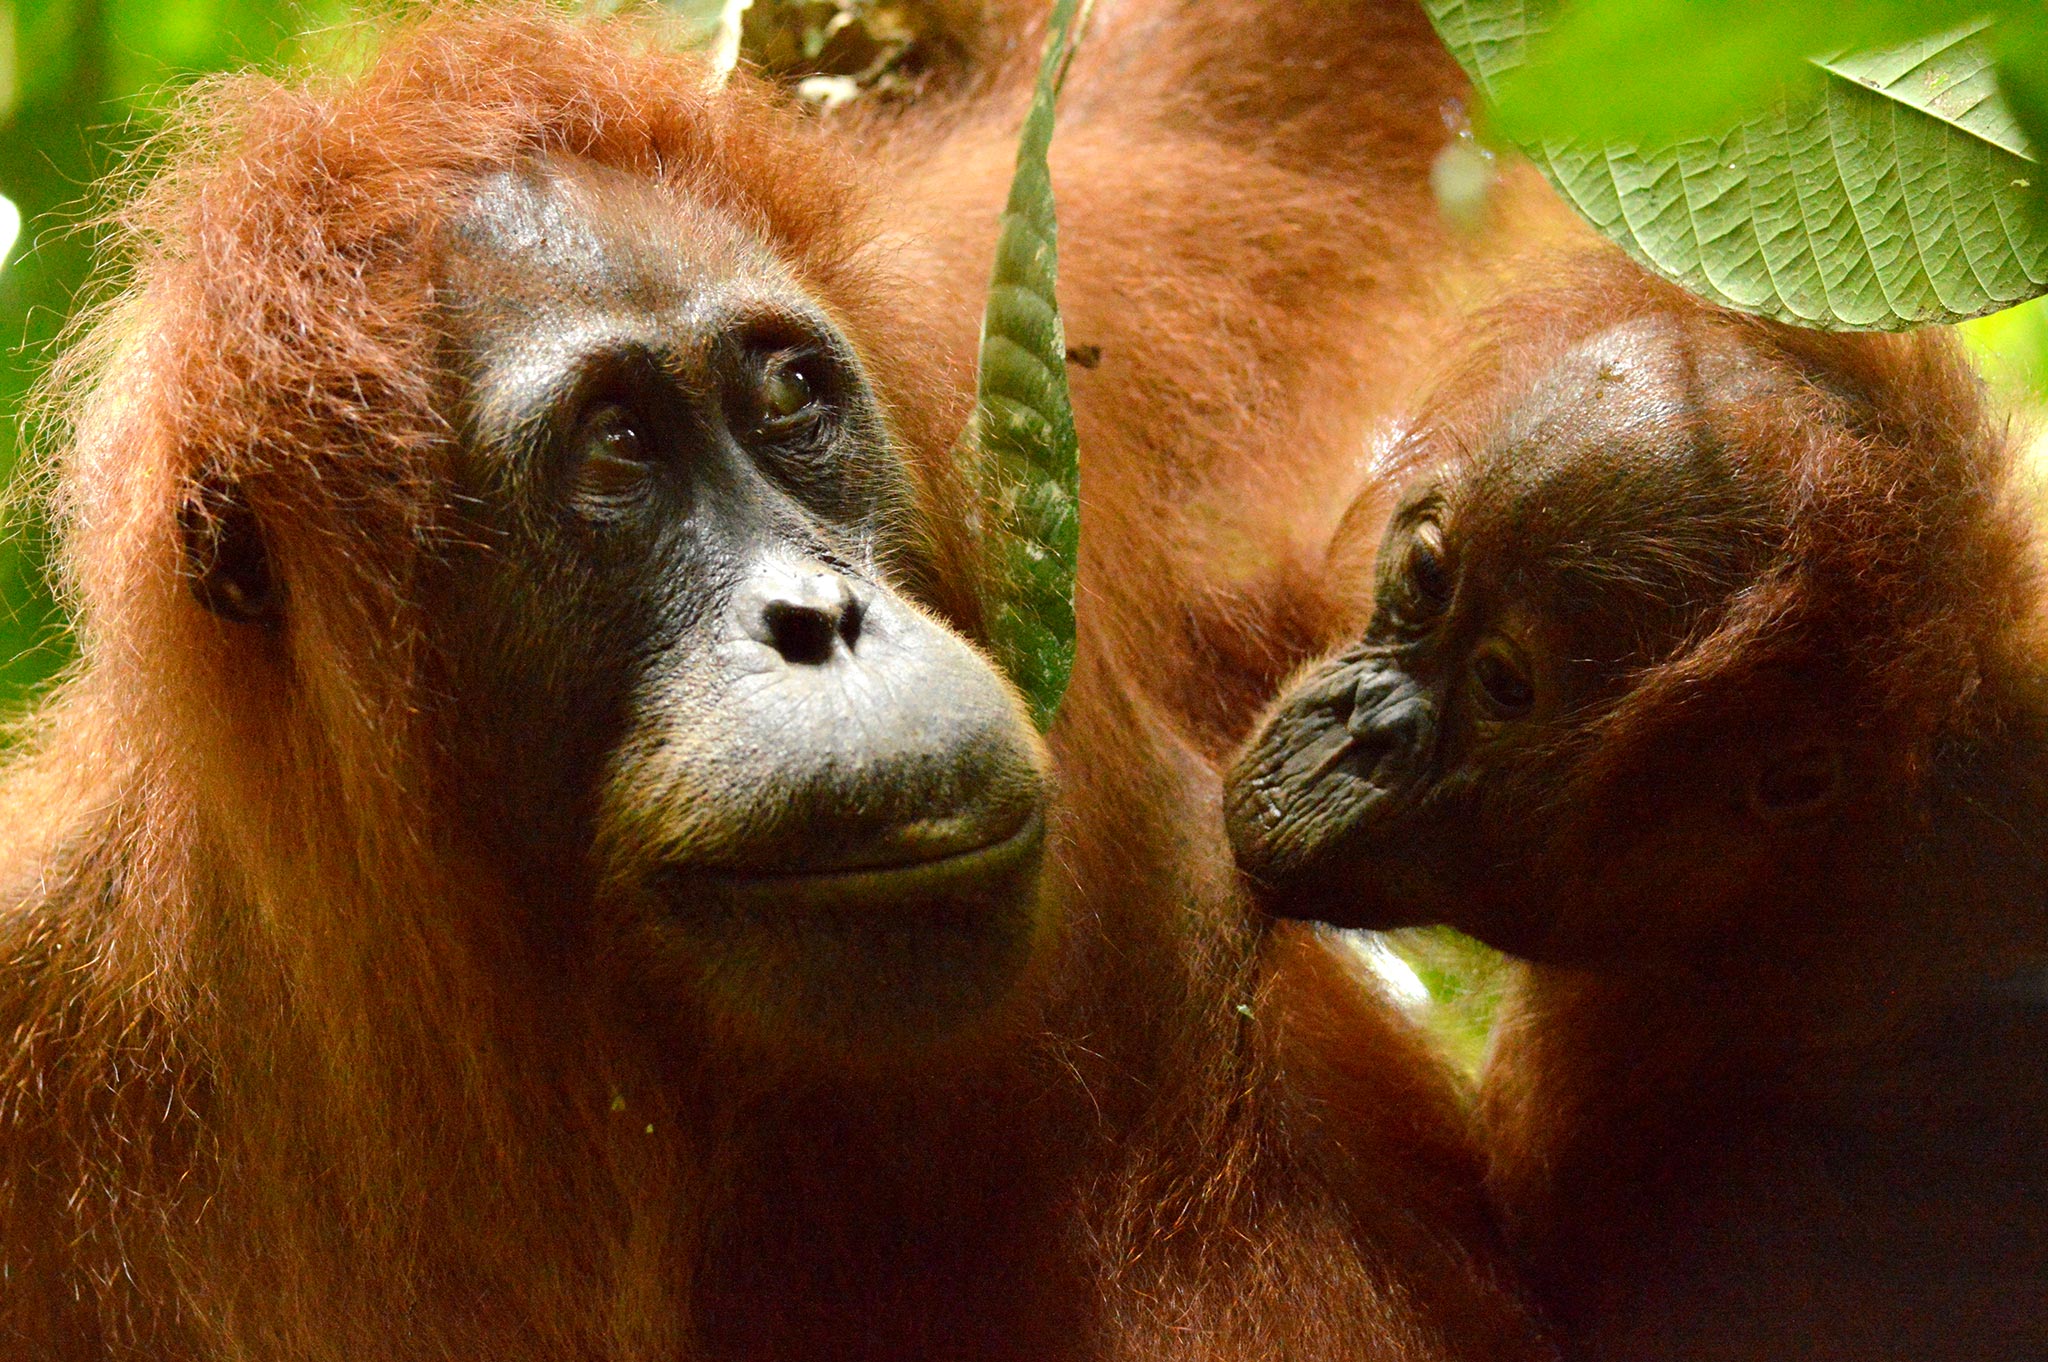 Orangutan Project